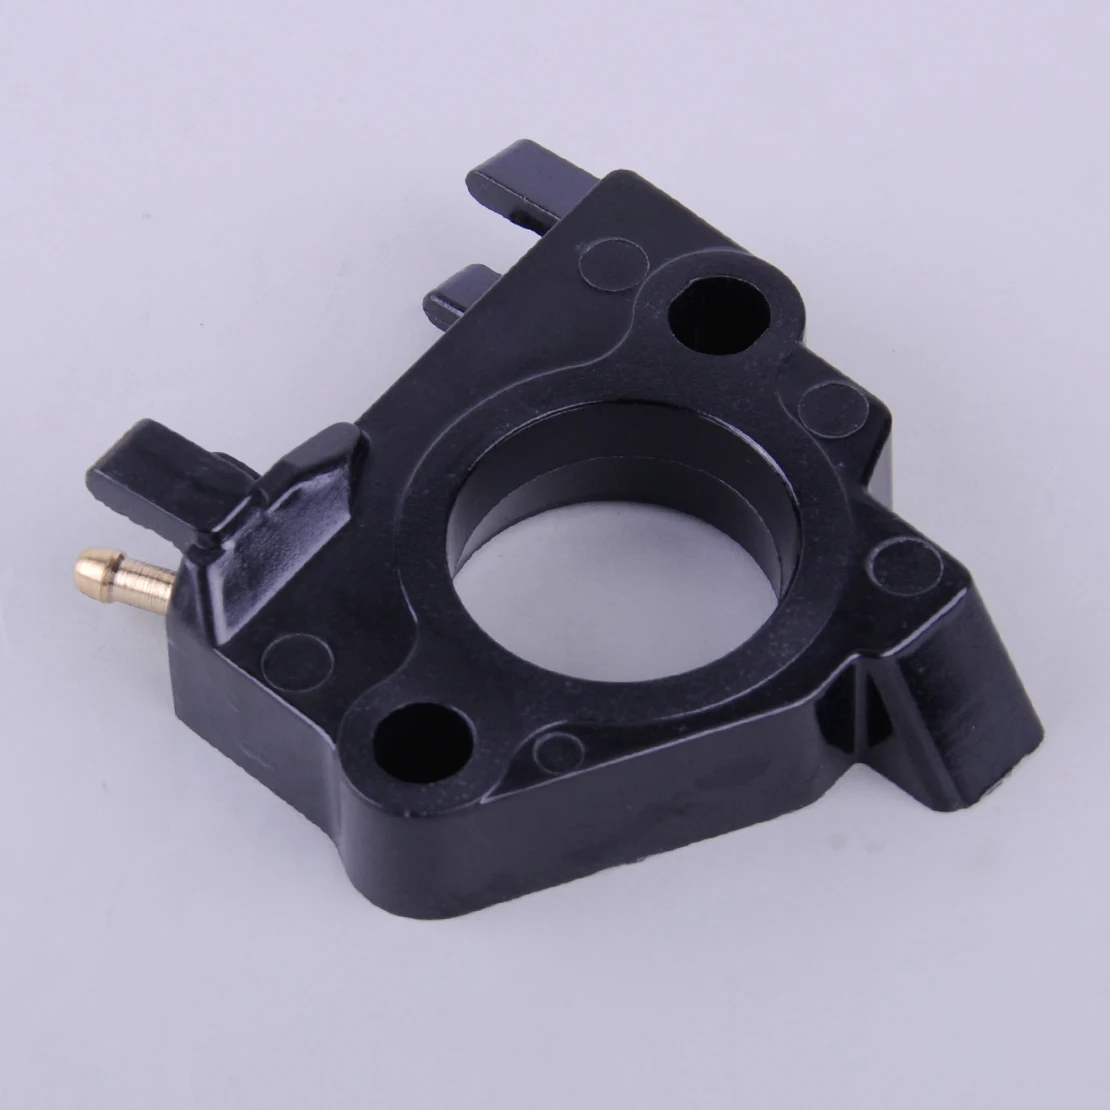 

LETAOSK High quality Black Carb Carburetor Insulator Spacer Fit For Honda GX340 GX390 11Hp 13Hp